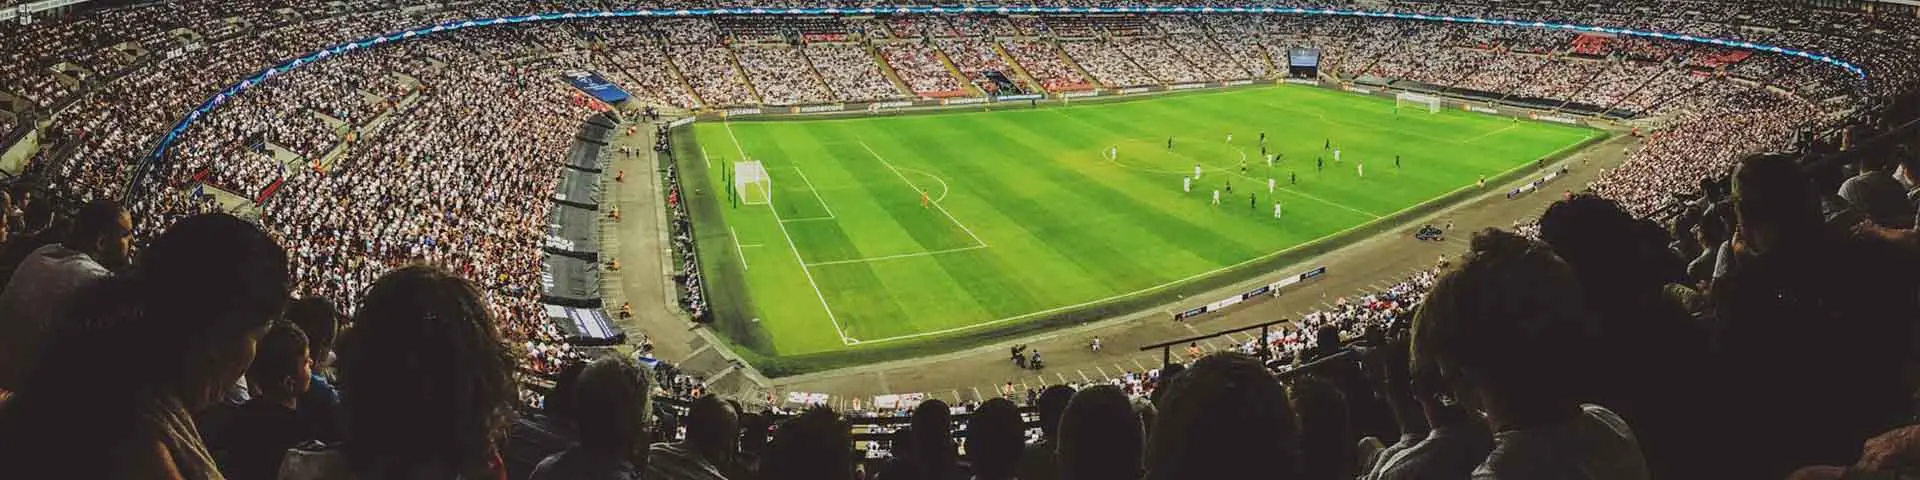 Large football stadium packed with spectators